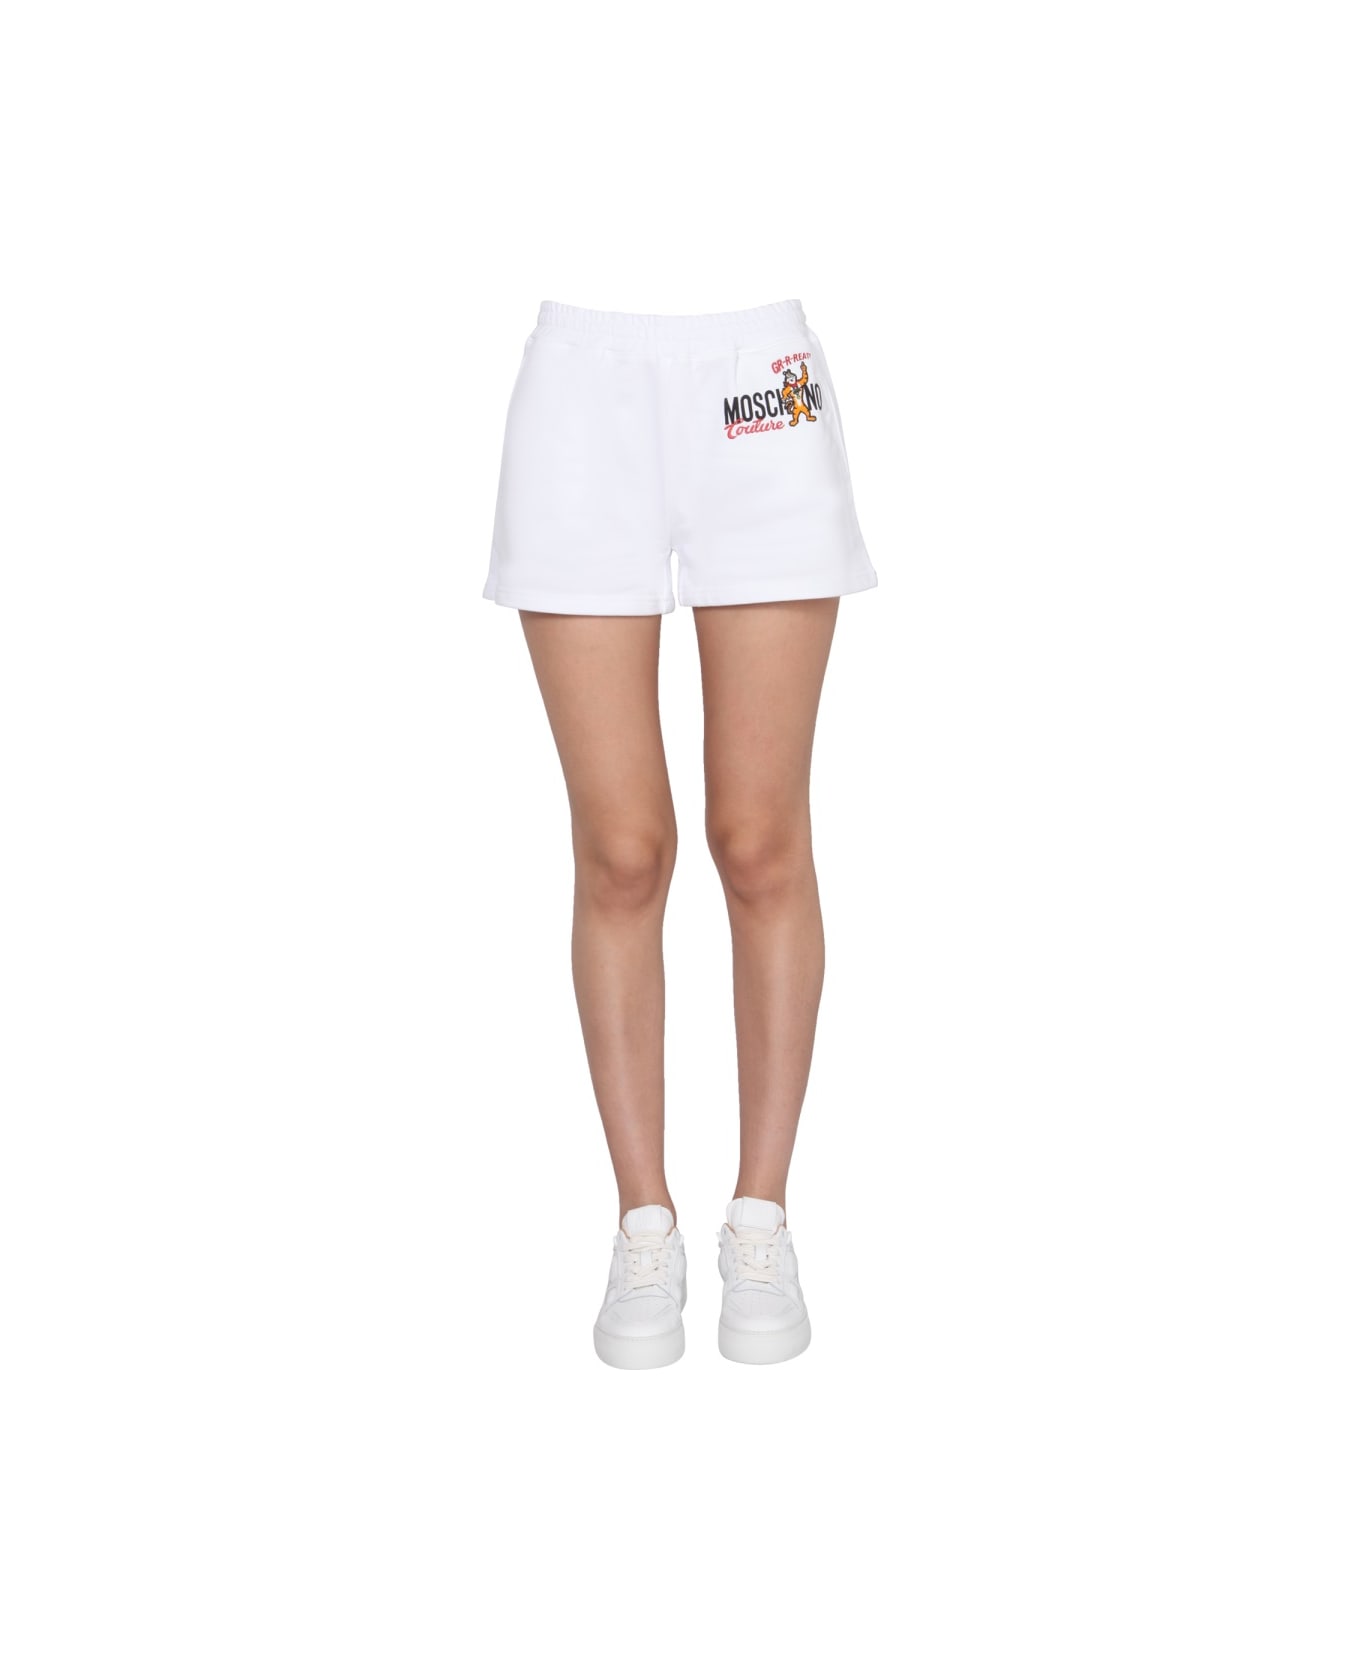 Moschino X Kellogg's Shorts - WHITE